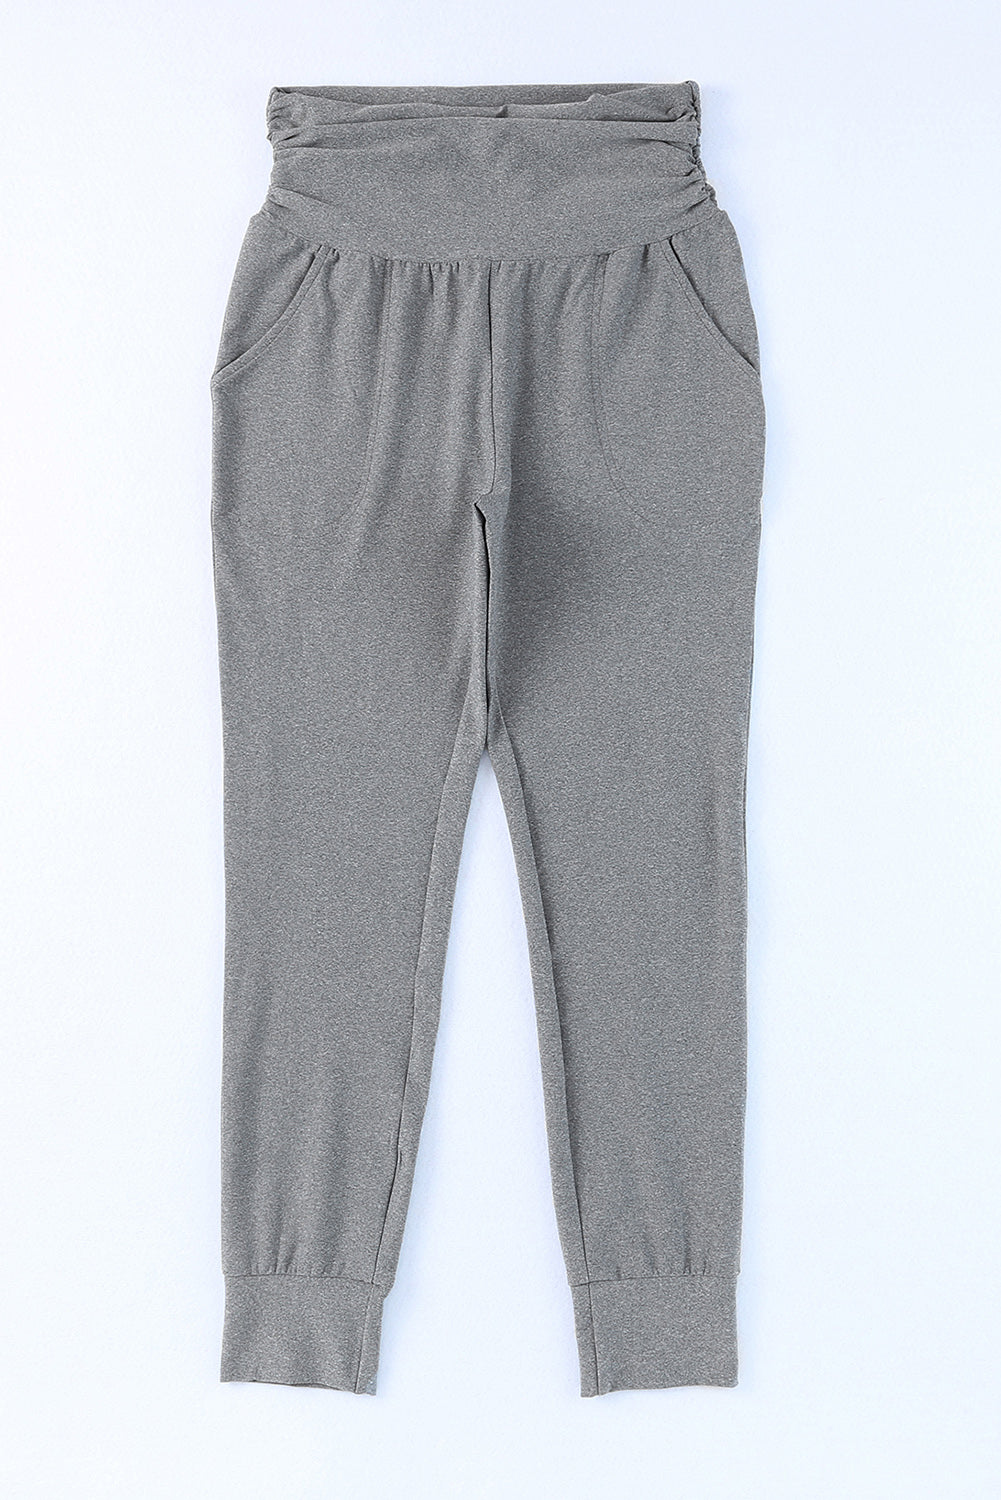 Grey Basic Pleated Pocket High Waisted Leggings